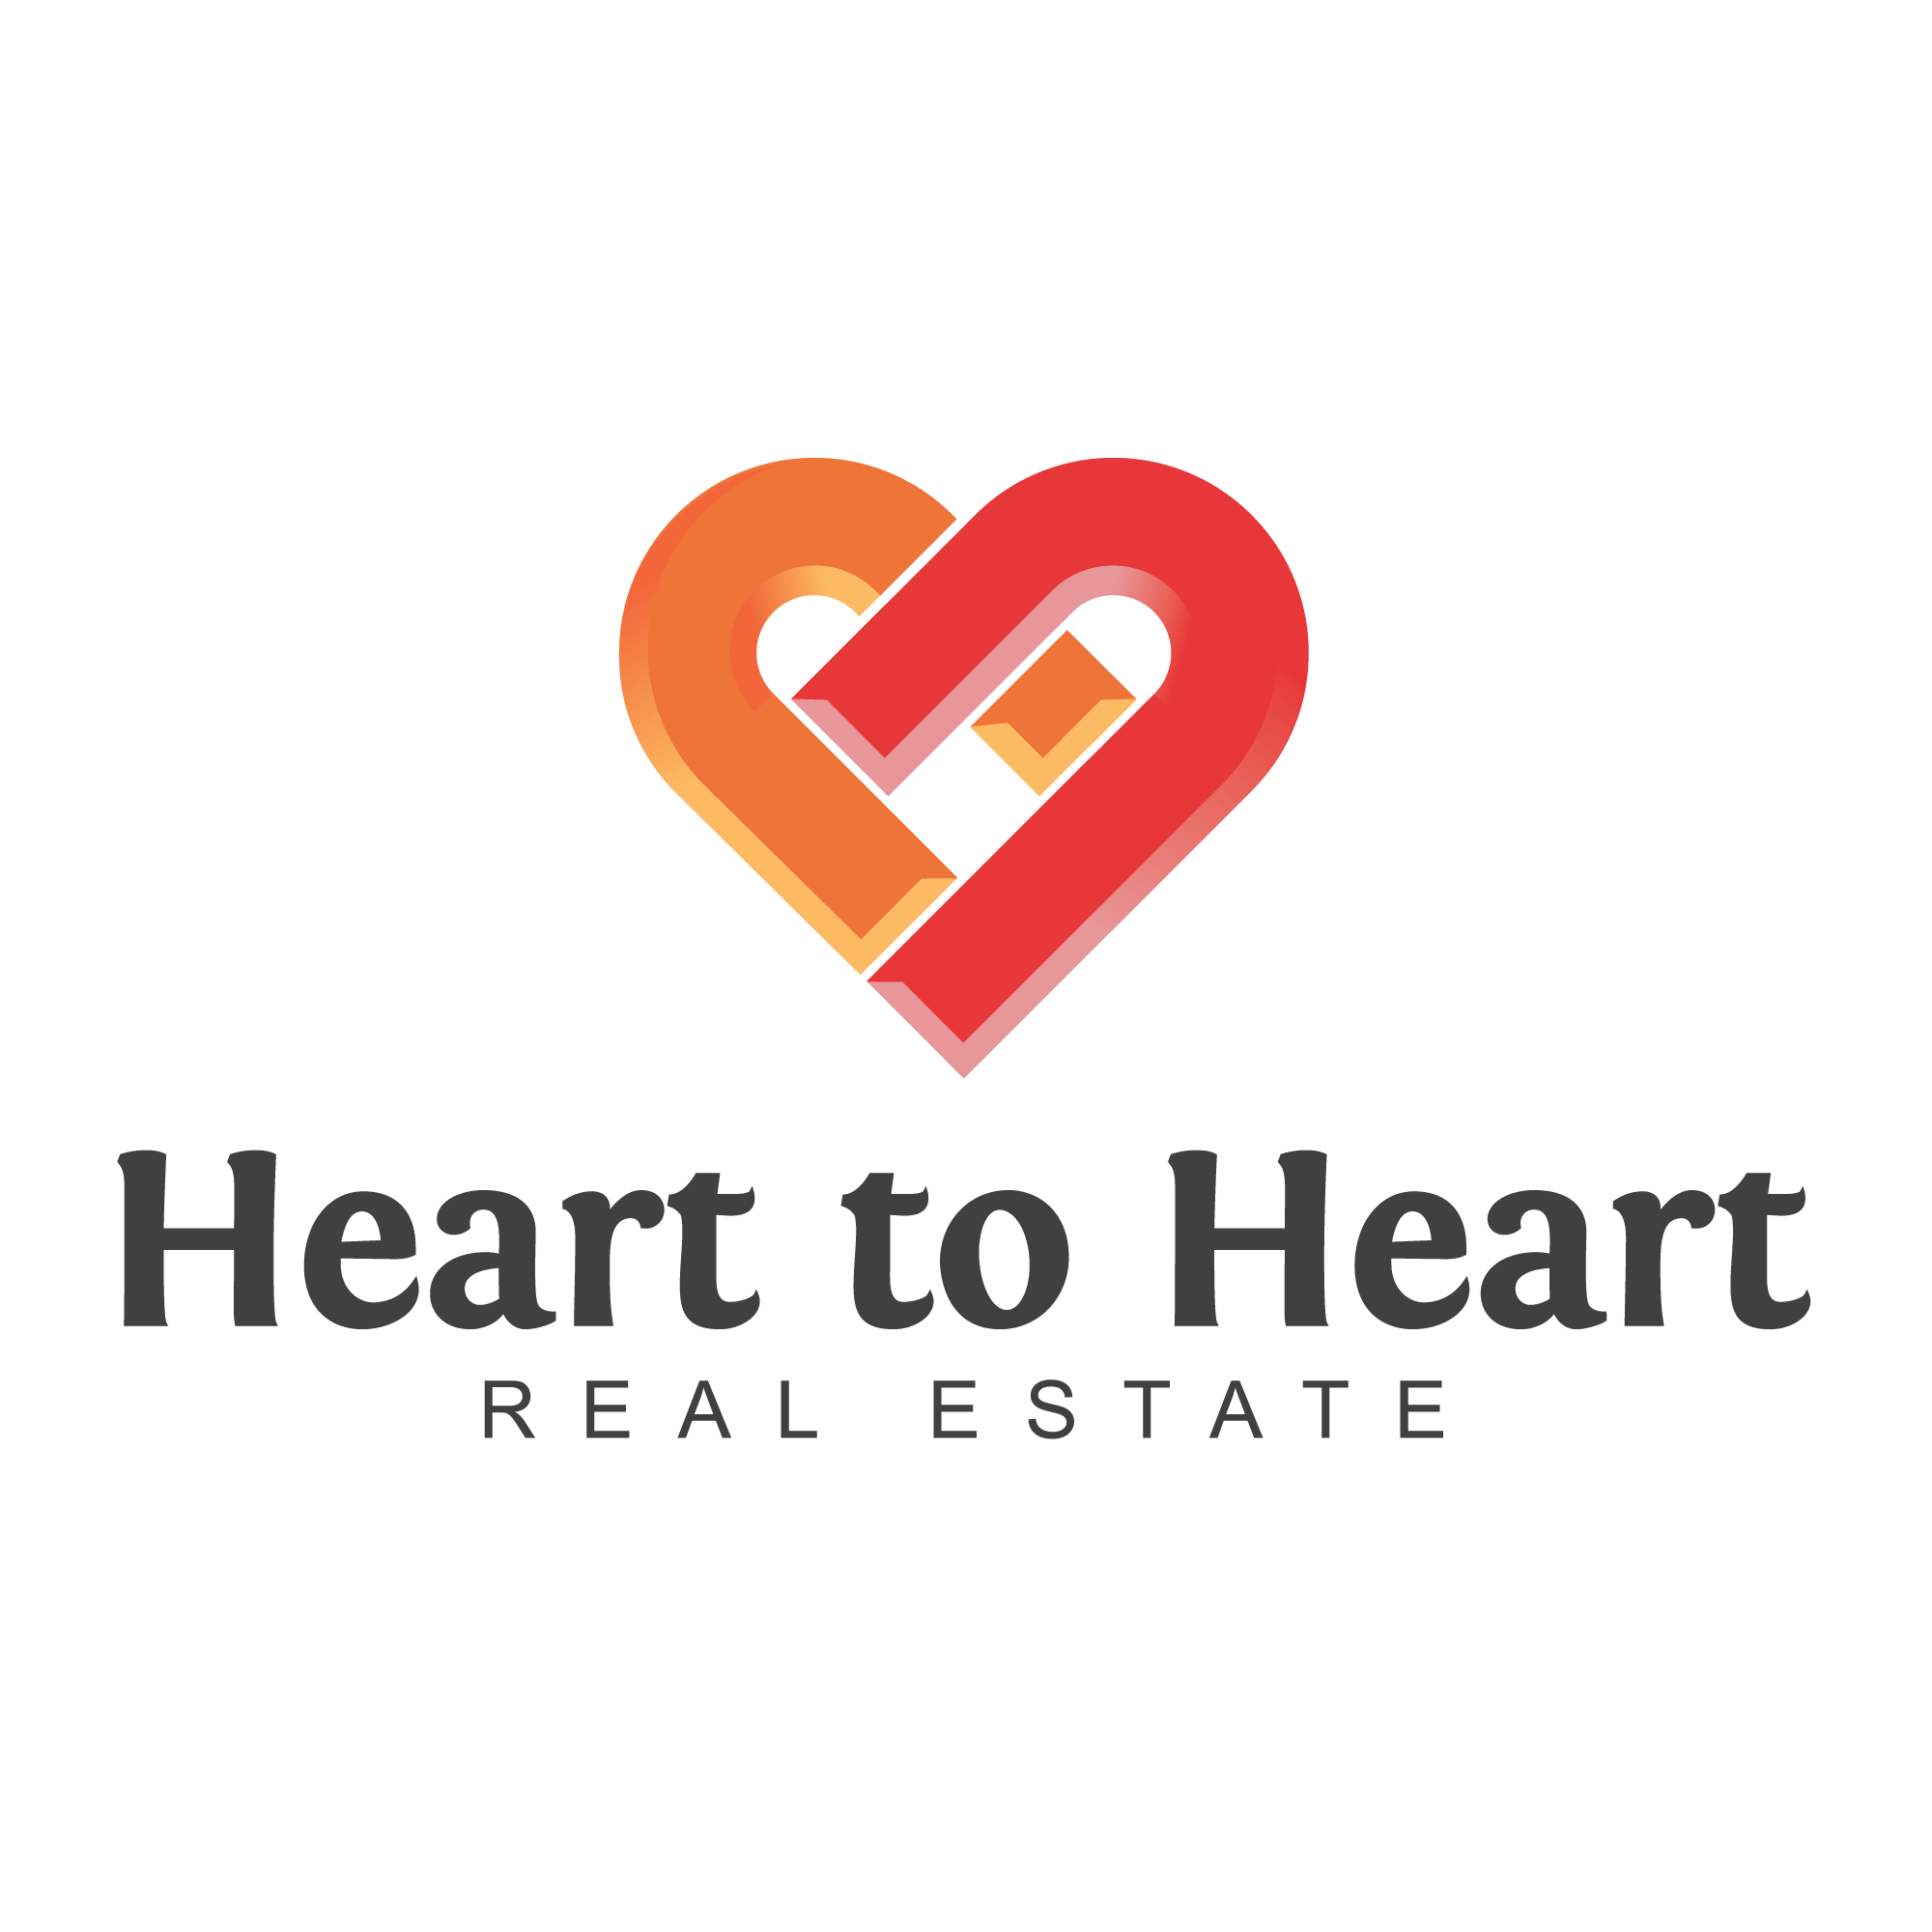 Heart to Heart Logo - Heart to Heart Real Estate